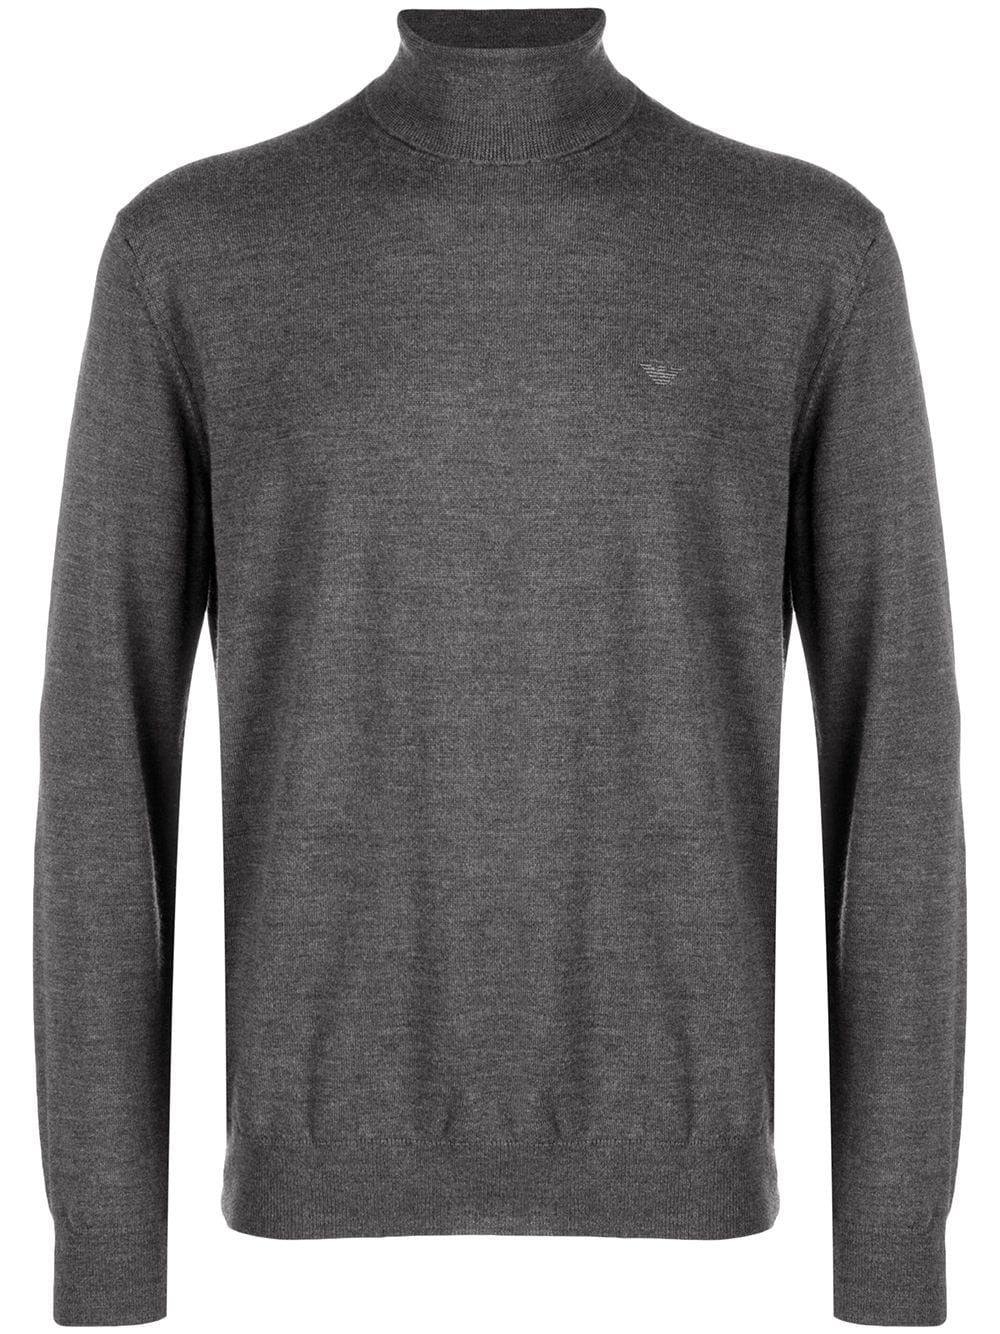 Emporio Armani embroidered logo turtleneck sweater - Grey von Emporio Armani